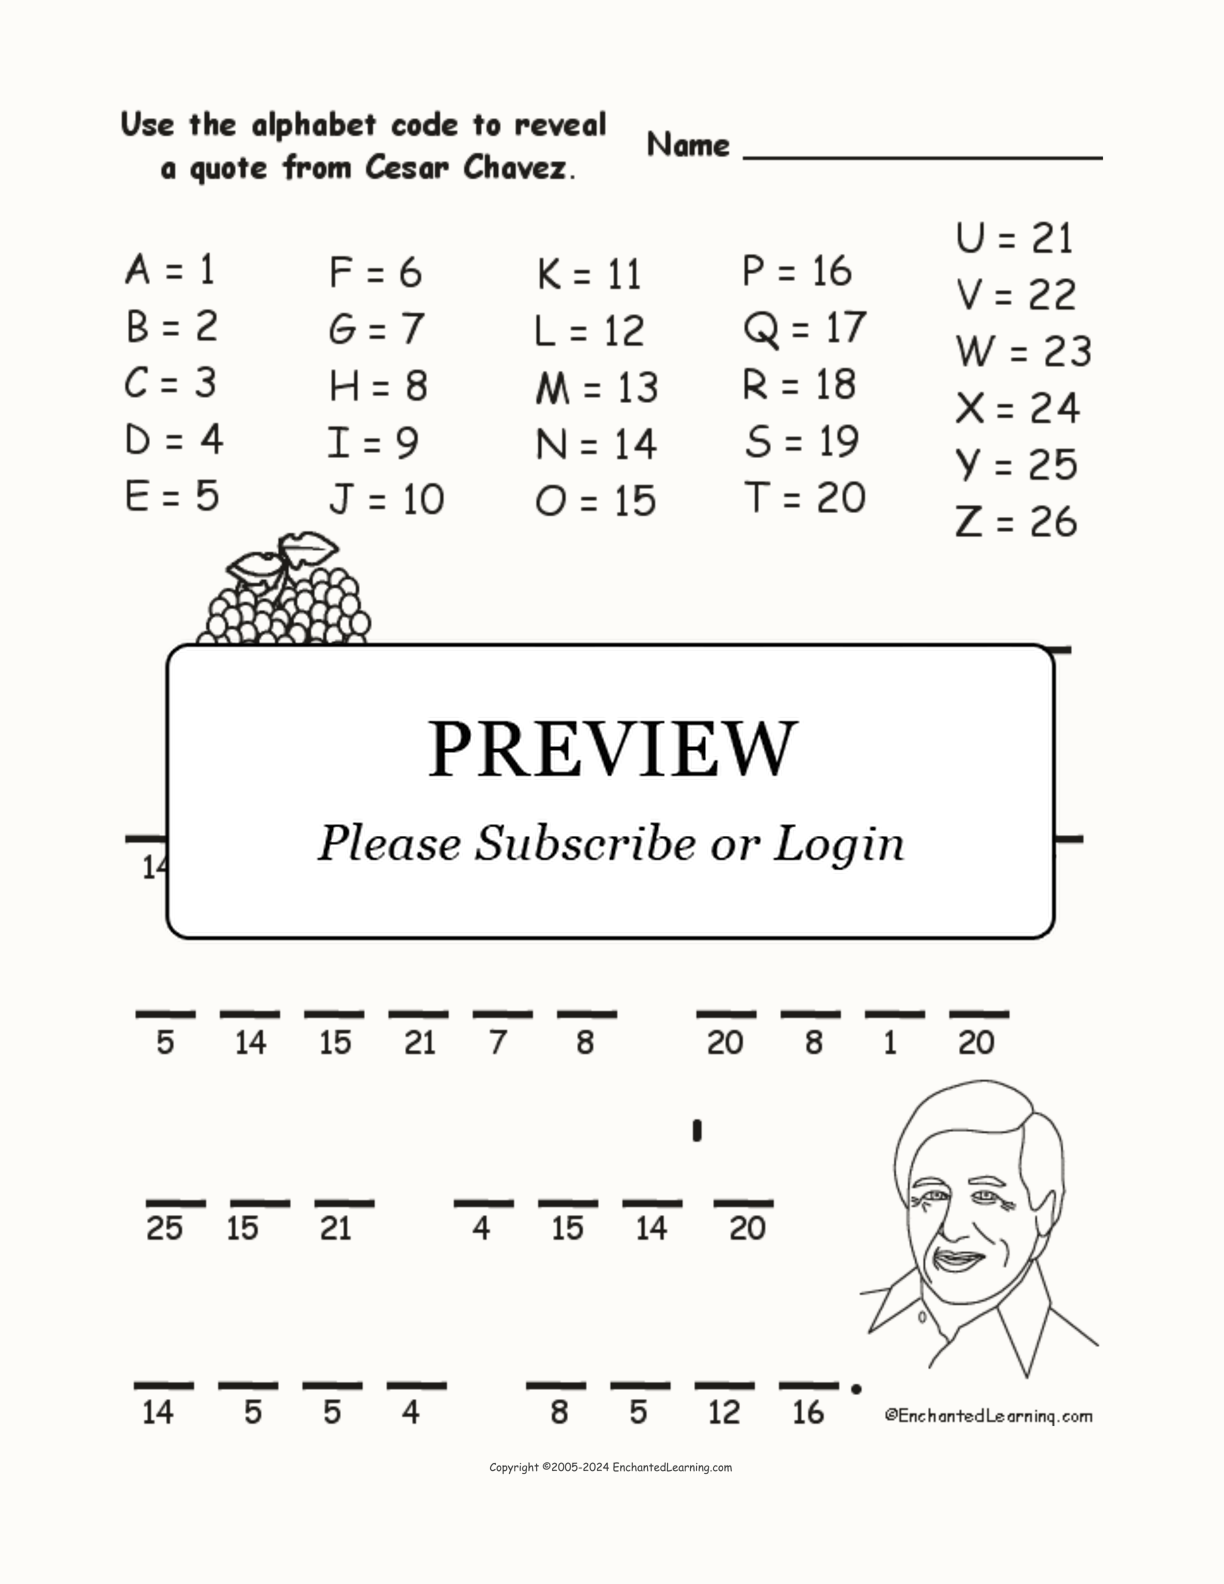 Cesar Chavez Alphabet Code interactive worksheet page 1